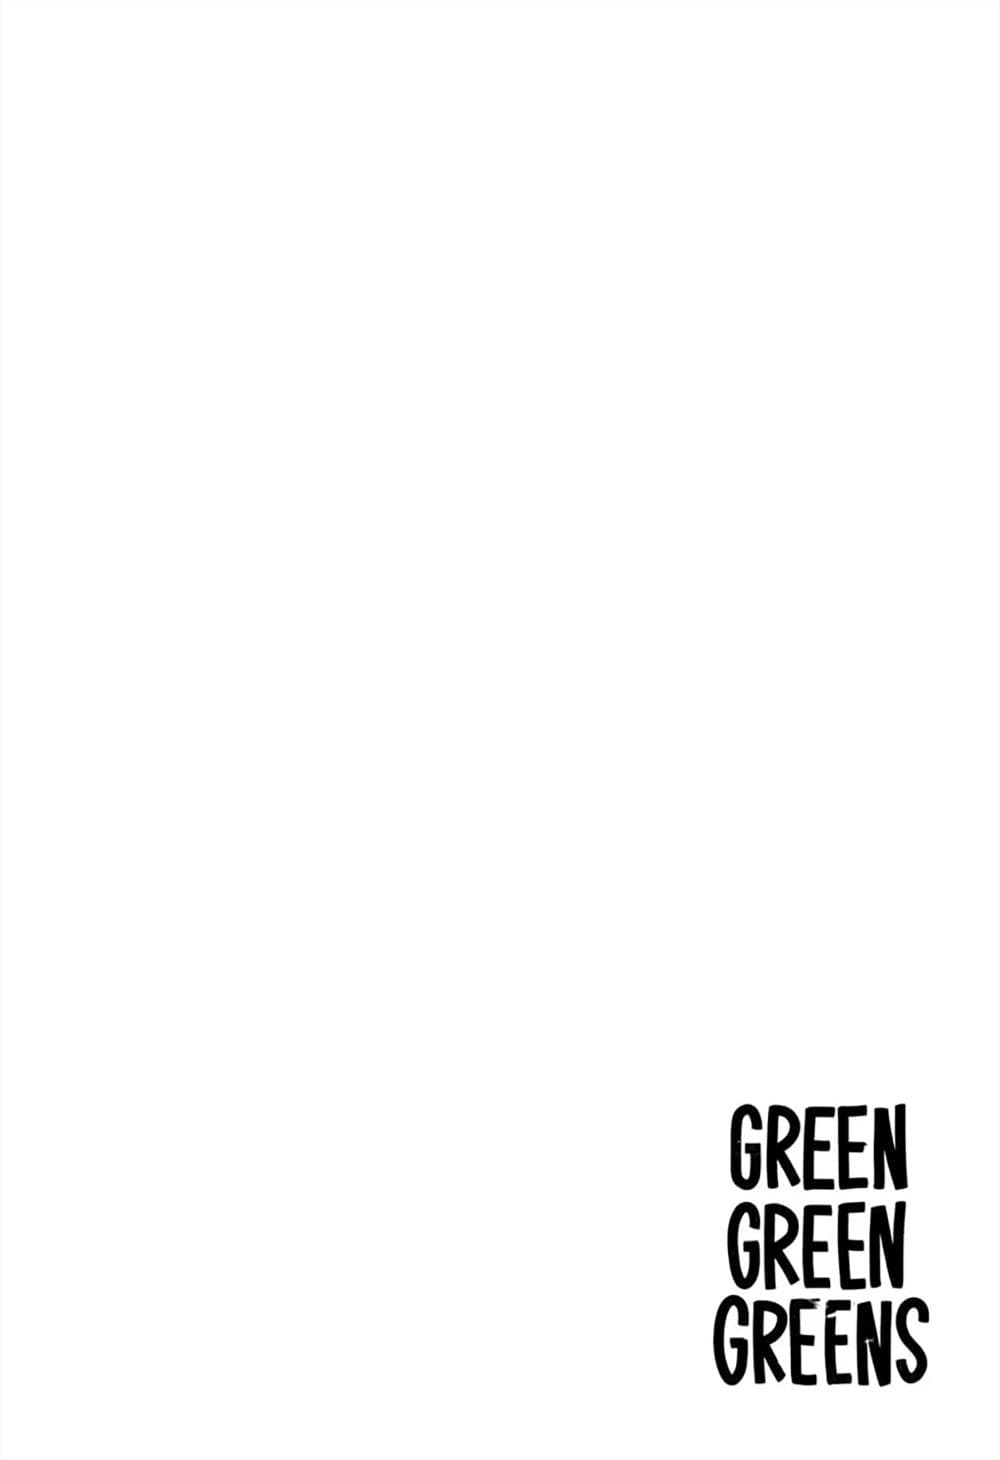 Green Green Greens ตอนที่ 1 (3)